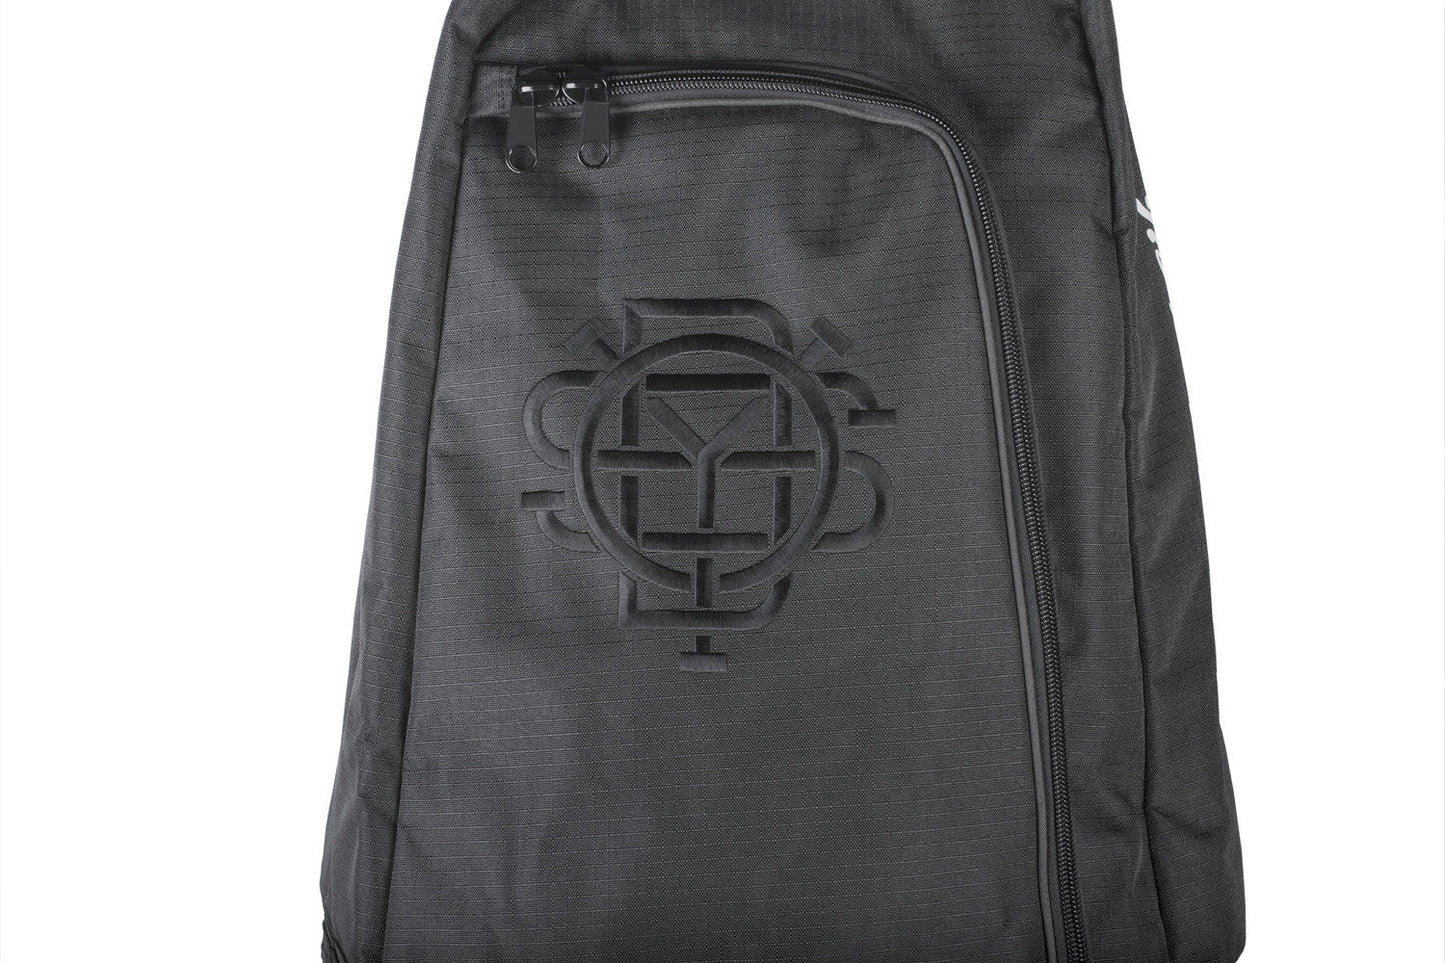 Odyssey Monogram Bike Bag (Black)